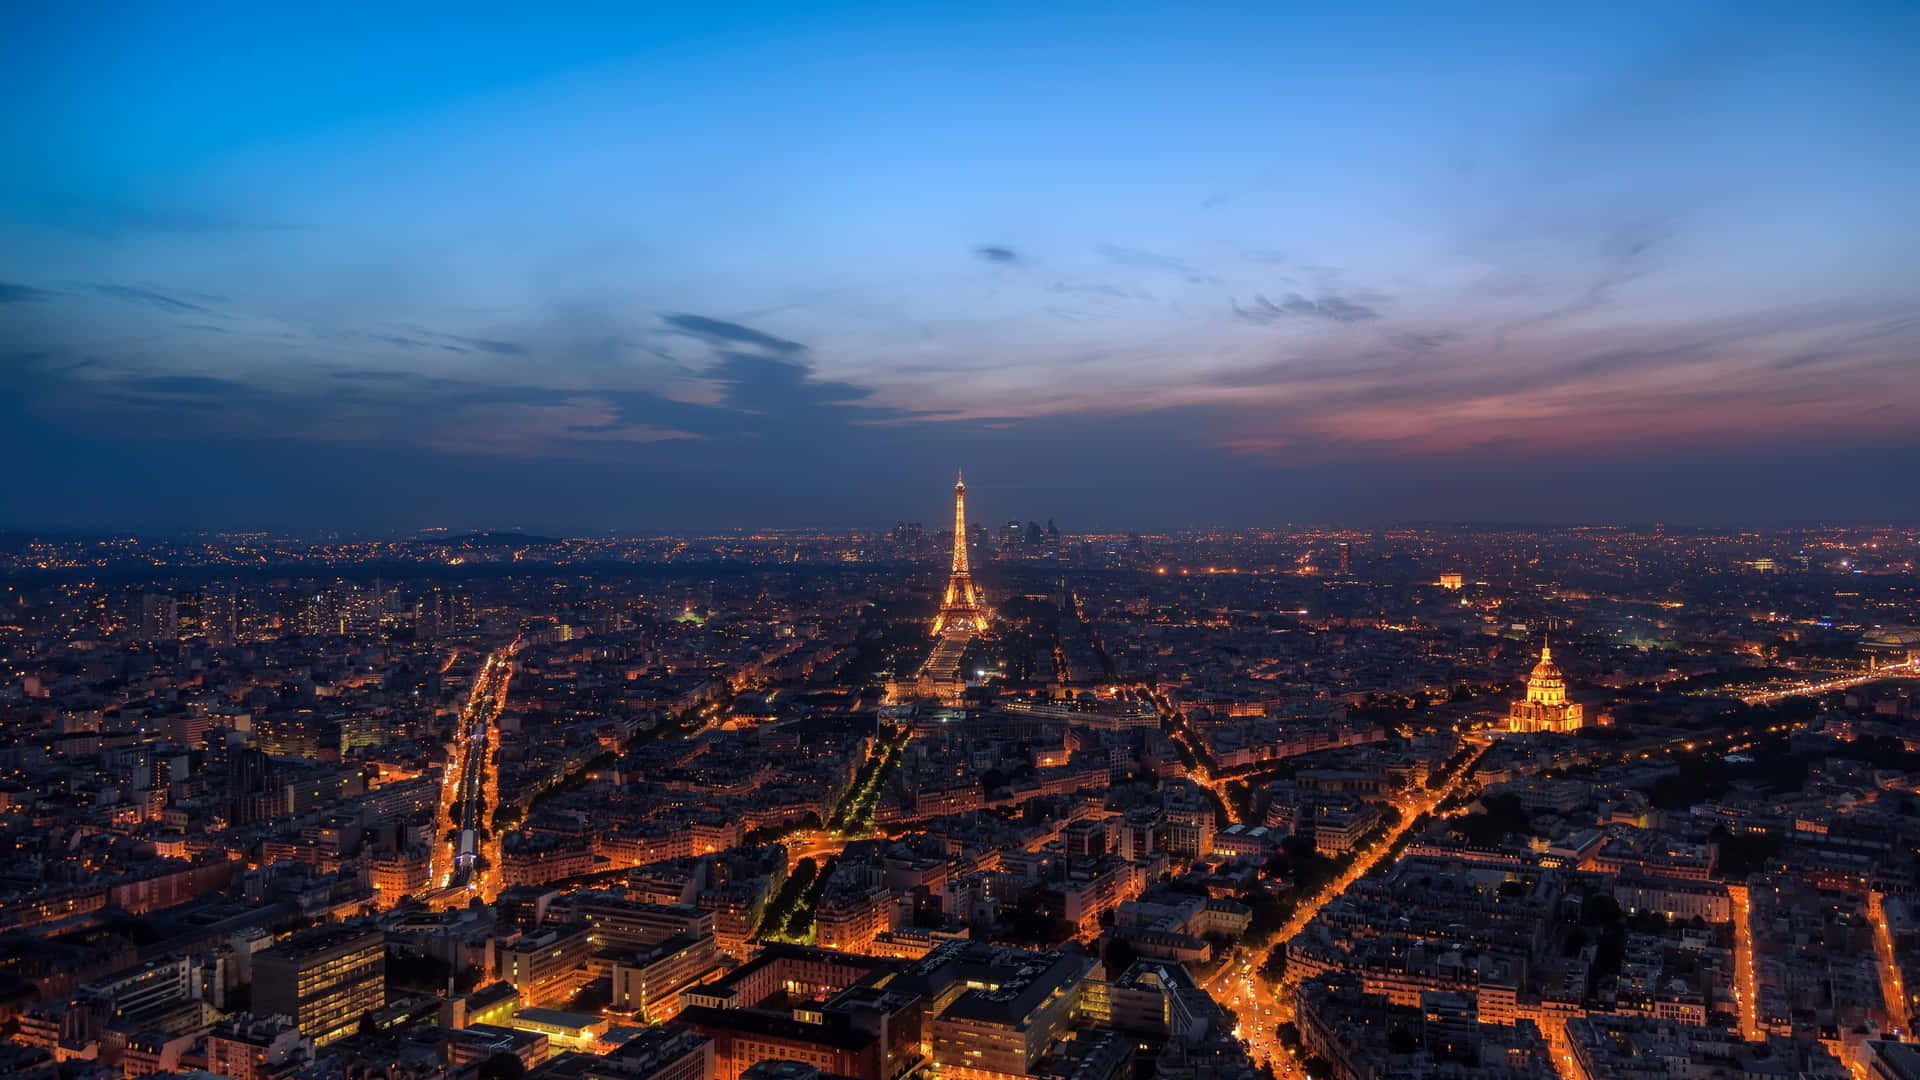 “Paris, the City of Lights” Wallpaper